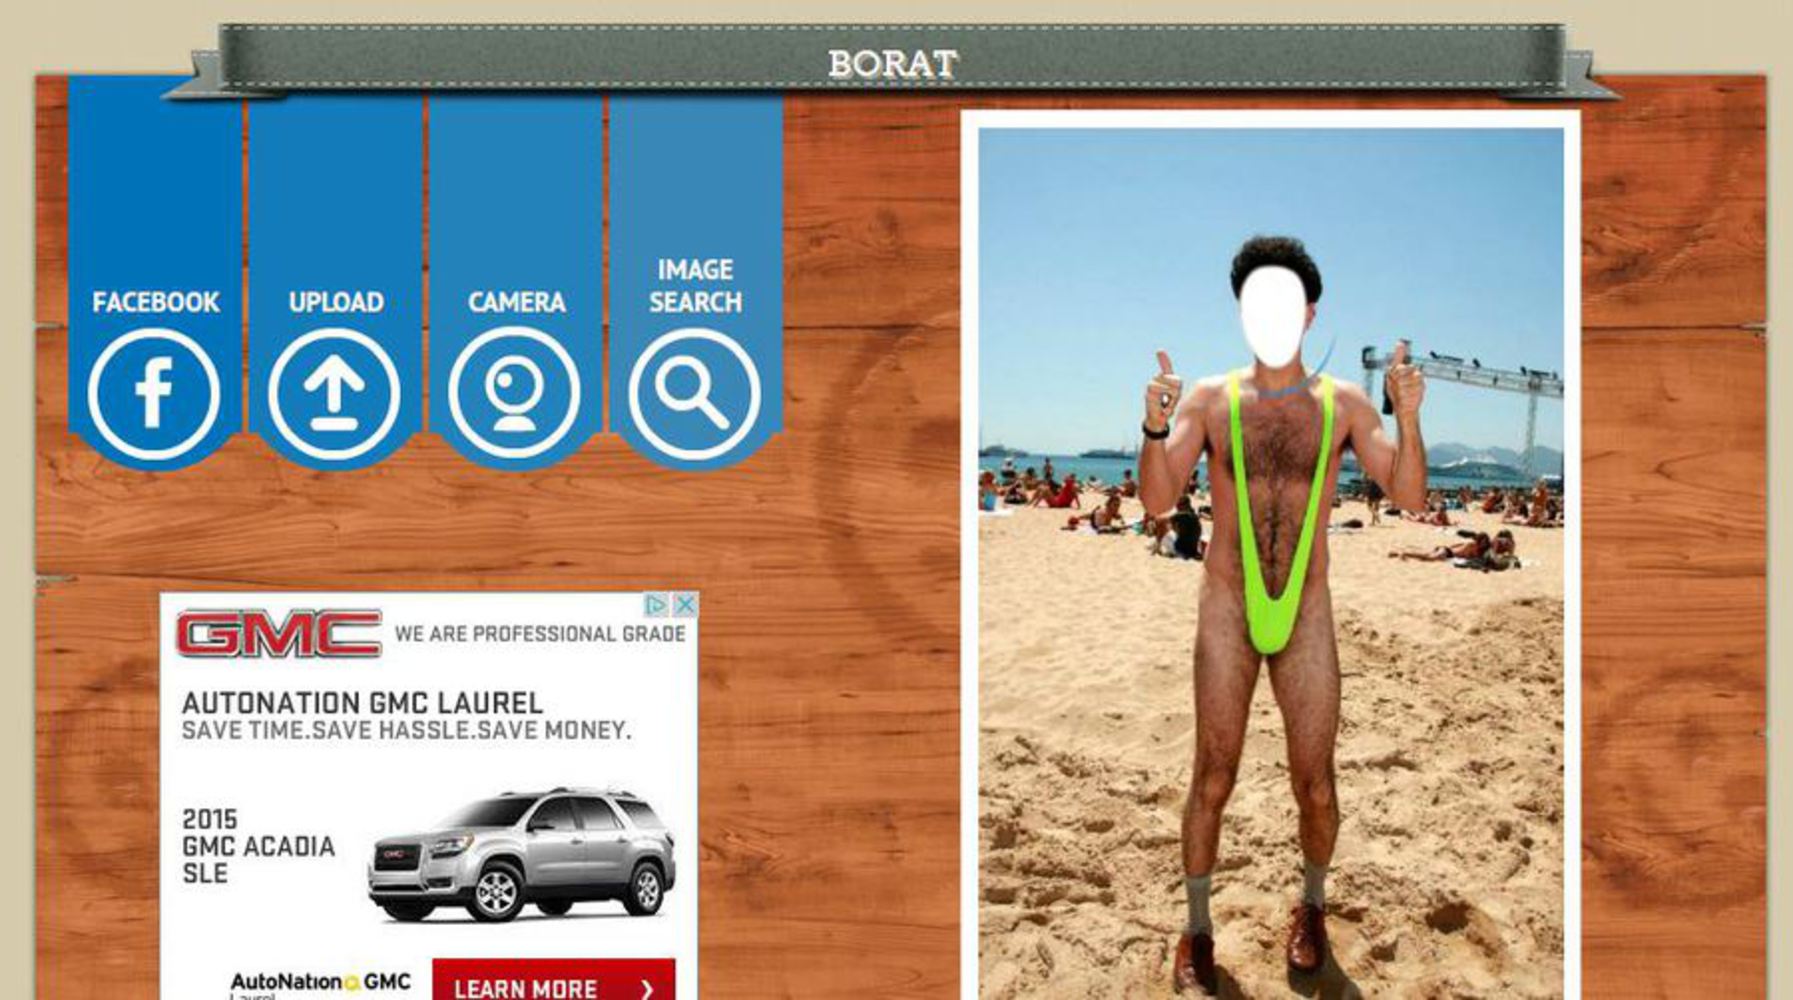 Weird swim suit guy.jpg.thumb